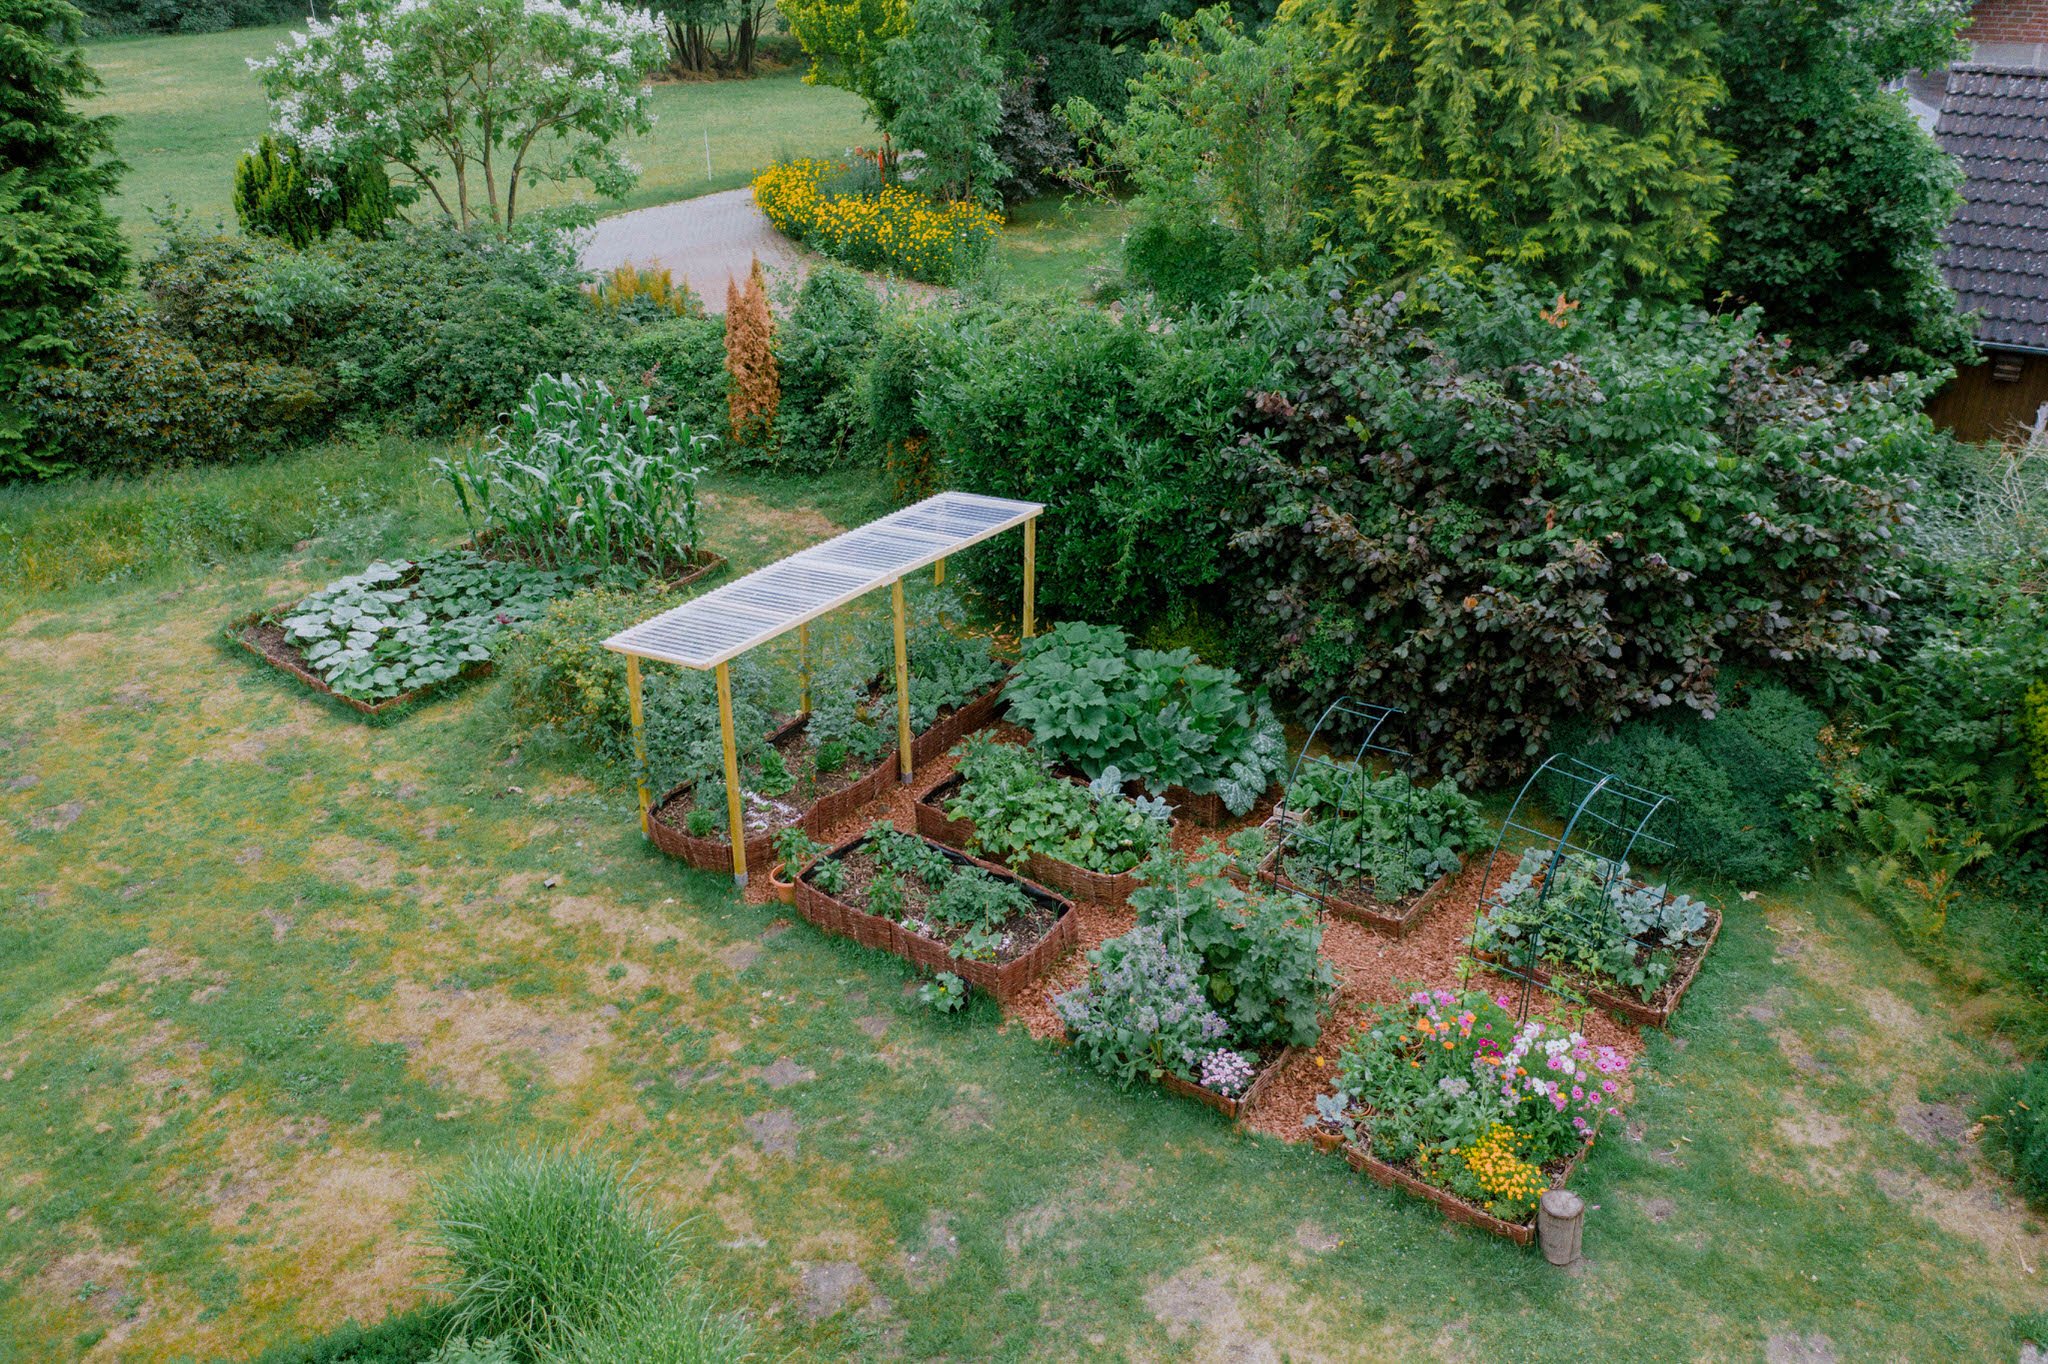 Vegetable Garden 2022 - Her86m2 - Drone - 32.jpg